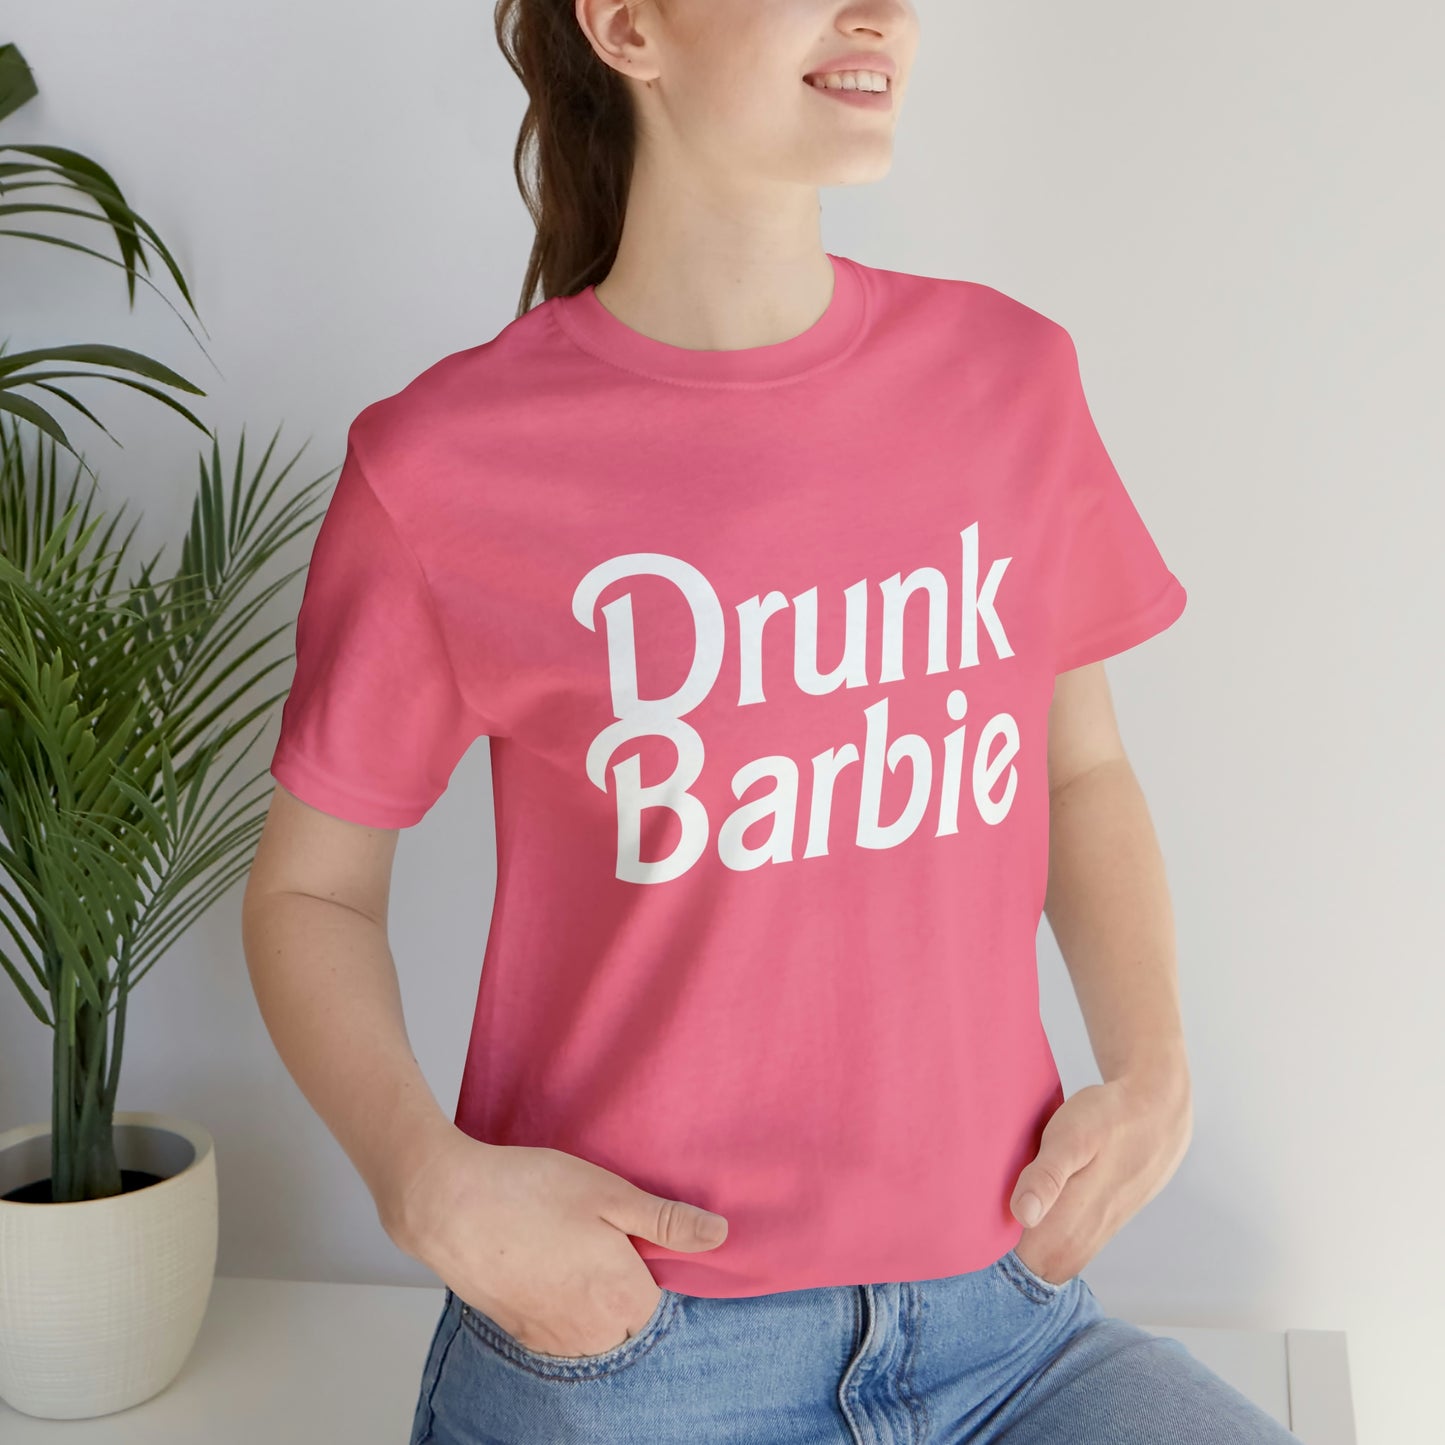 Drunk Barbie